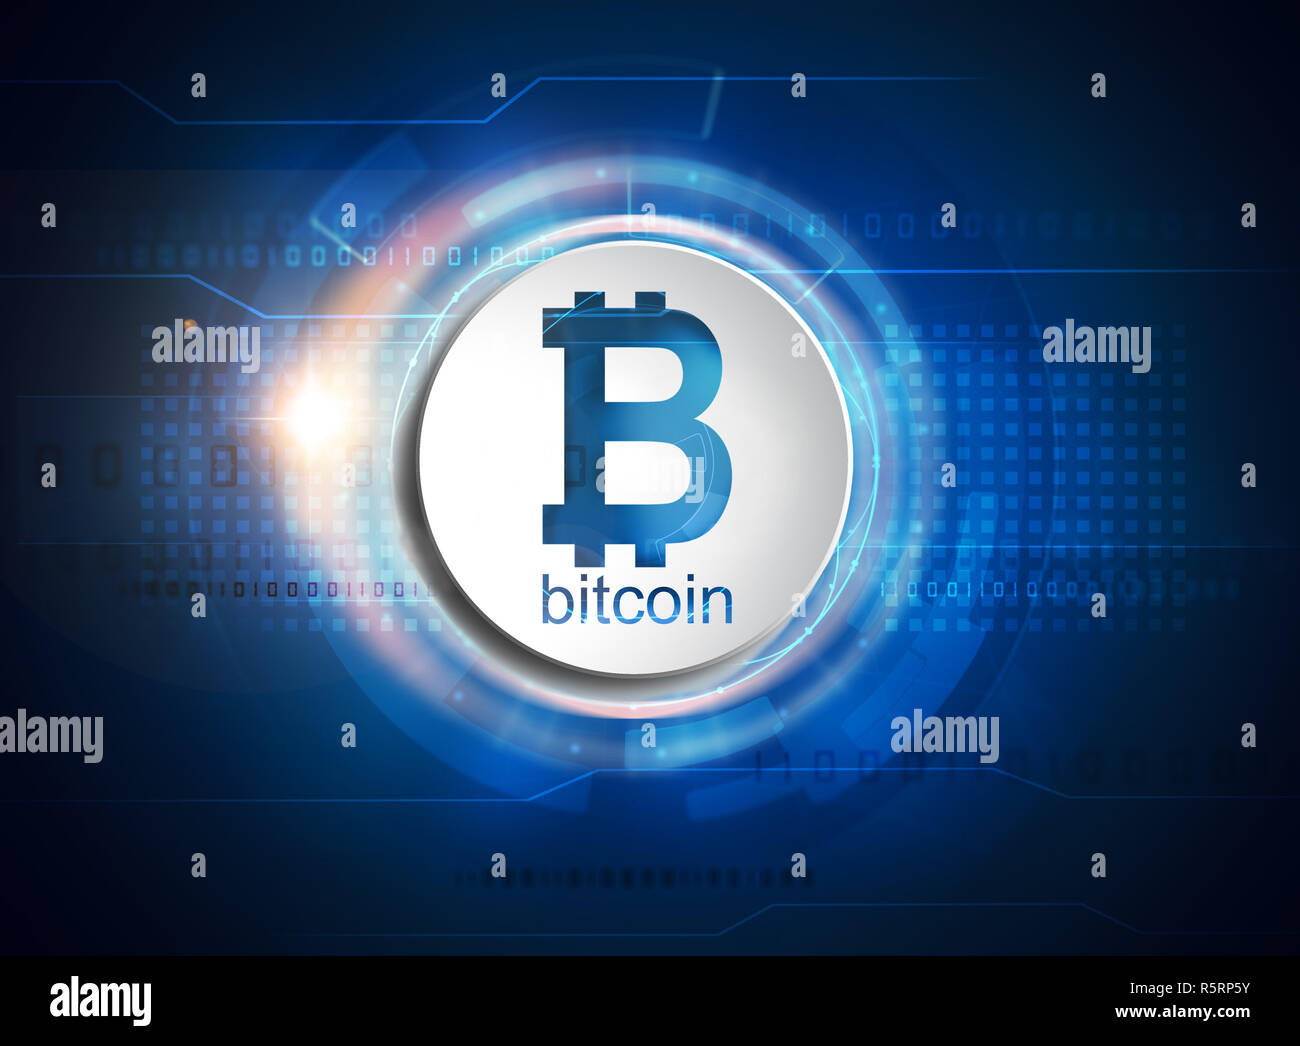 bitcoin symbol or icon Stock Photo